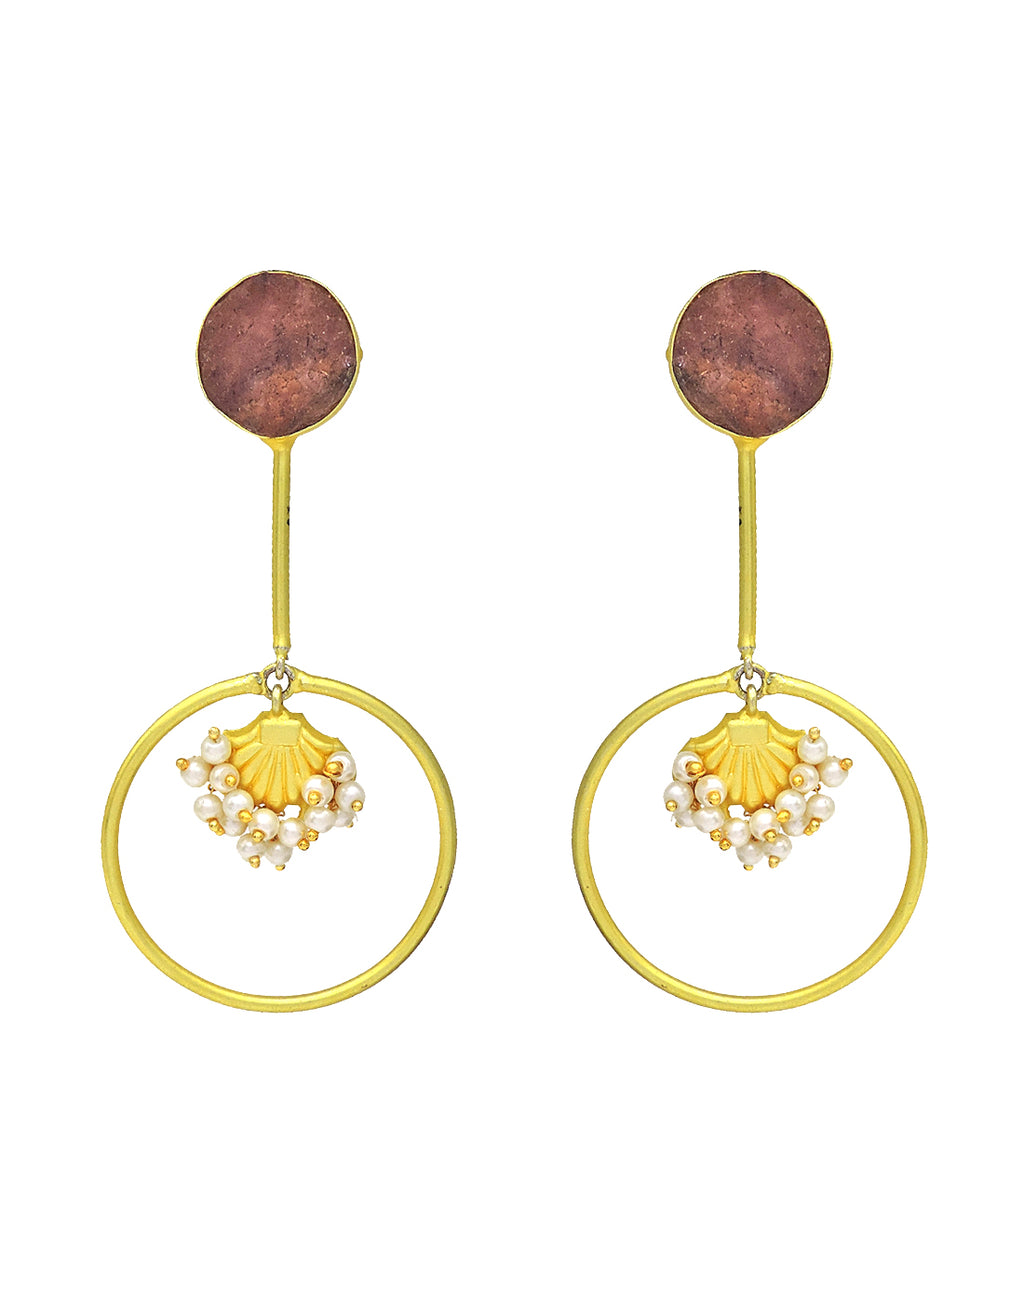 Stick Hoop Earrings (Quartz) - Statement Earrings - Gold-Plated & Hypoallergenic - Made in India - Dubai Jewellery - Dori